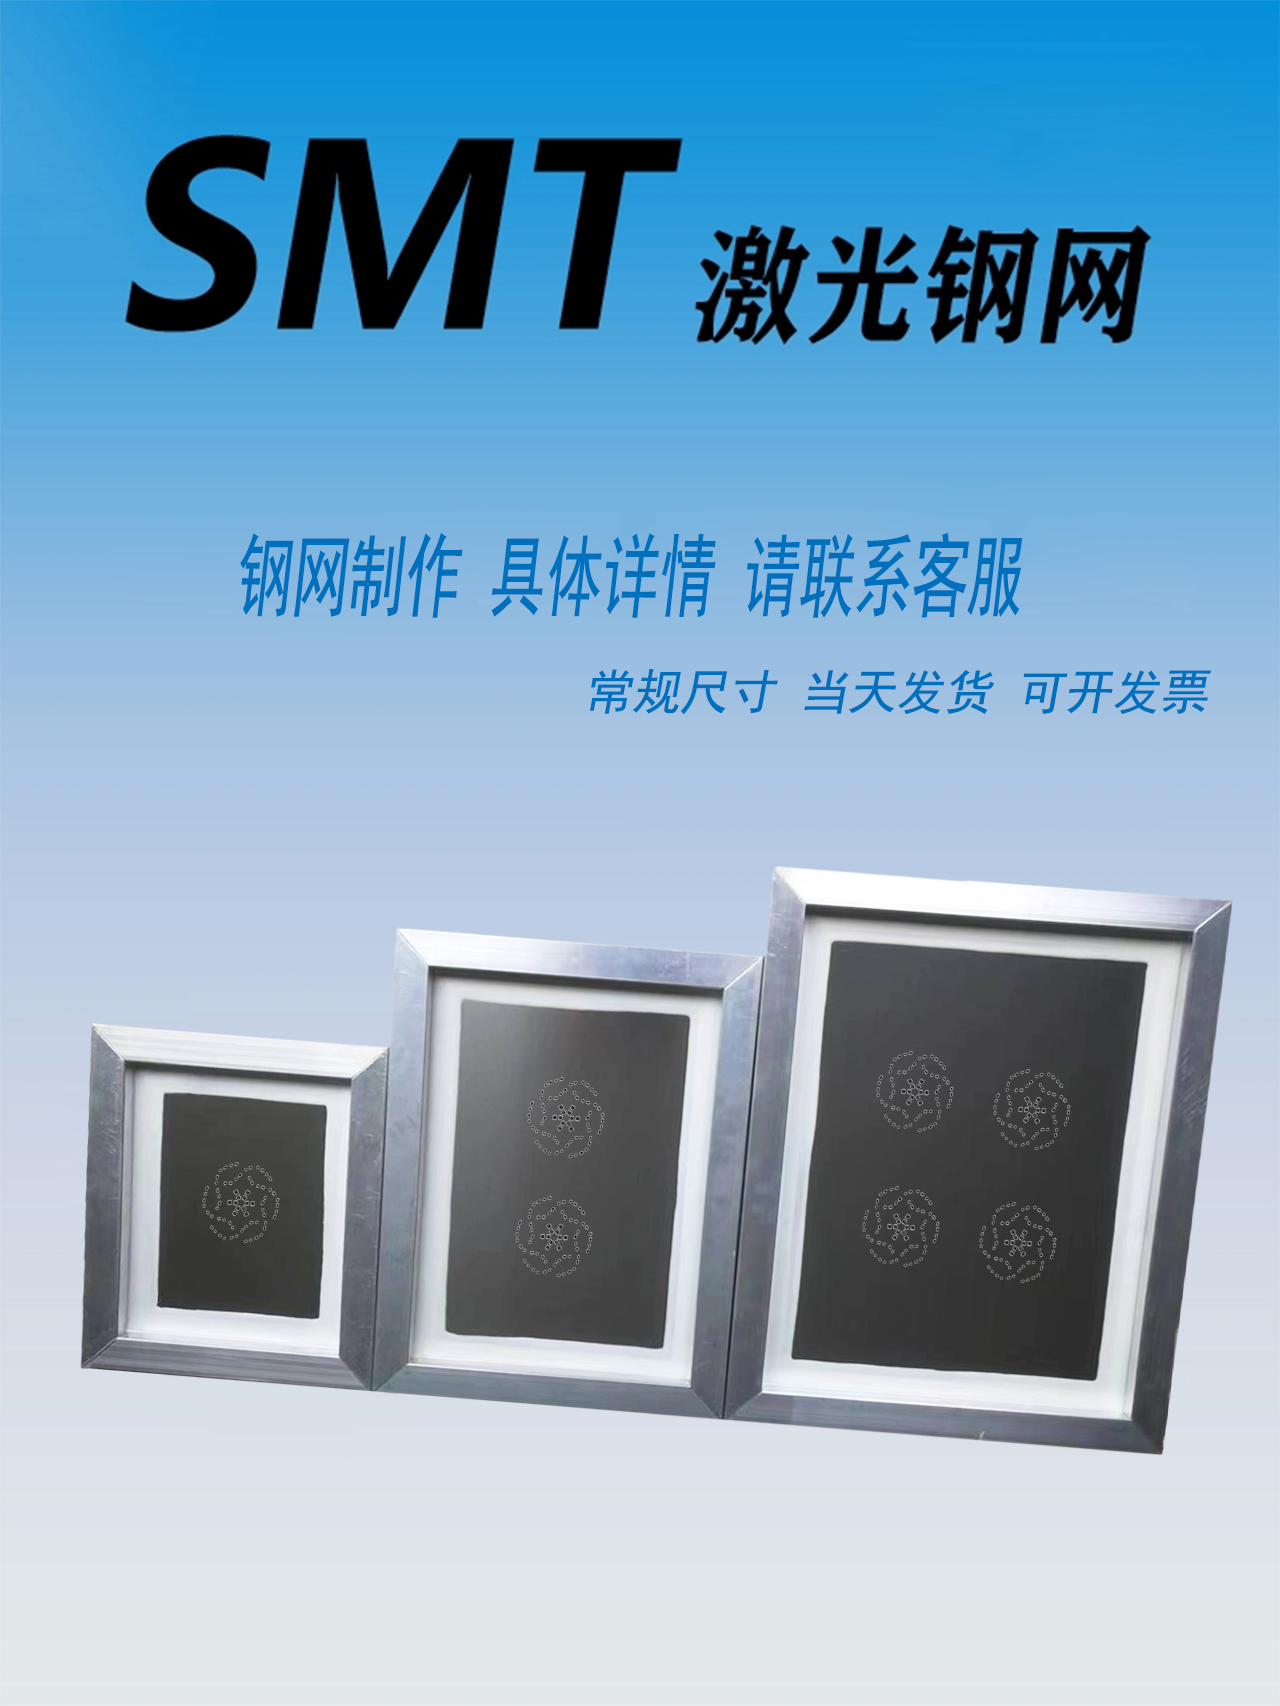 SMT激光钢网PCB贴片锡膏红胶LED铝基板贴片散热硅胶3747钢网制作